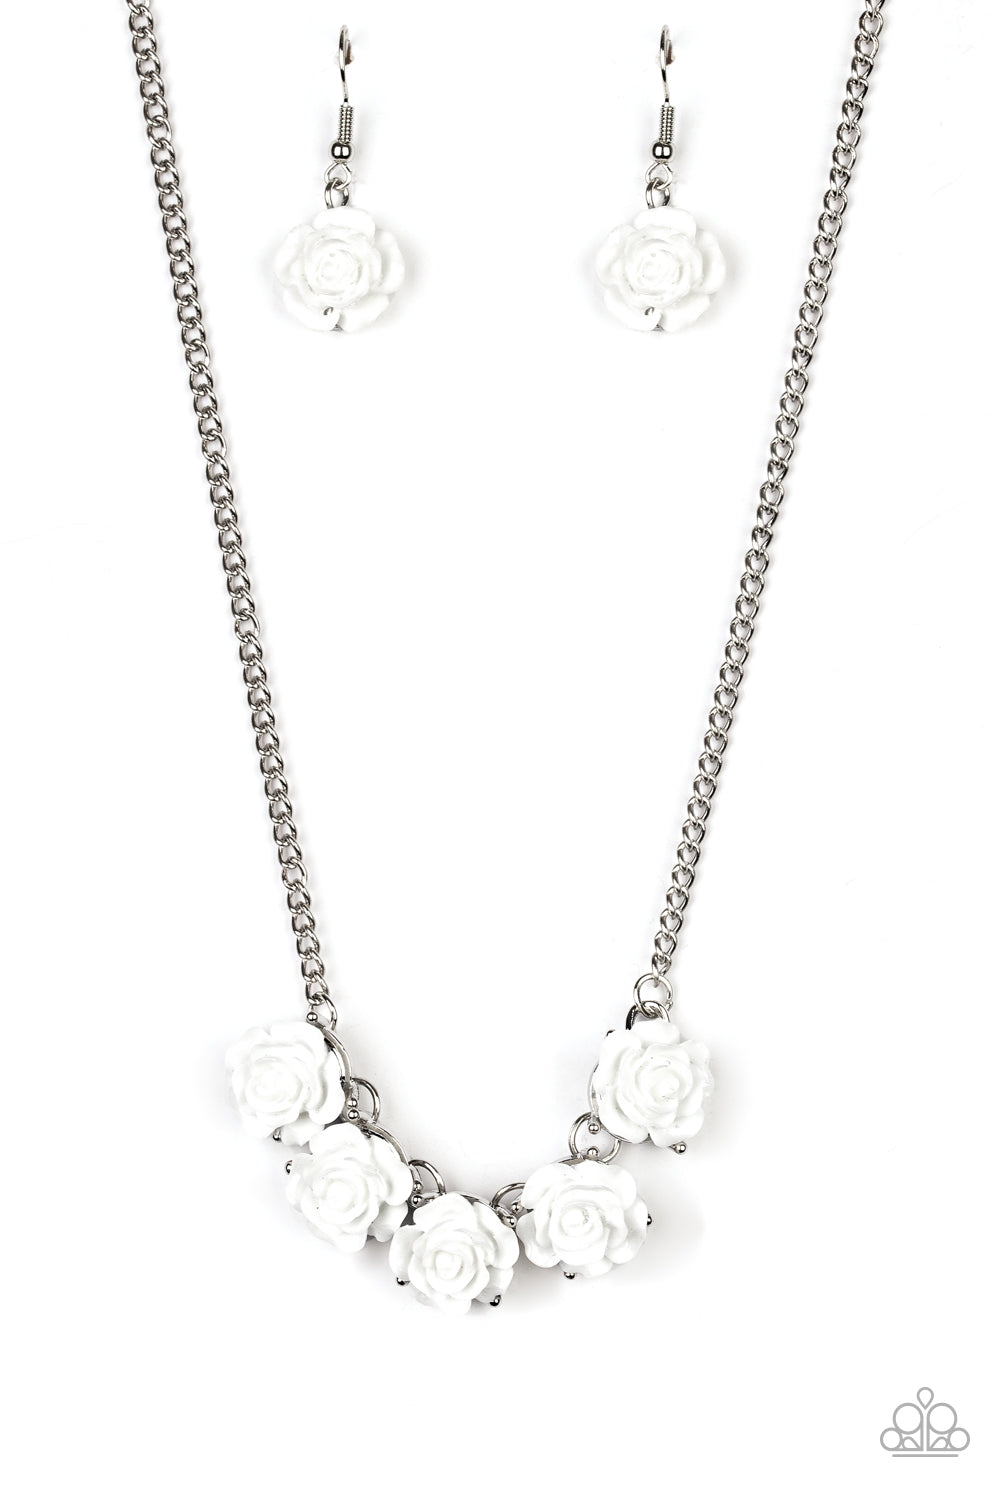 Garden Party Posh - Paparazzi - White Rose Silver Chain Necklace